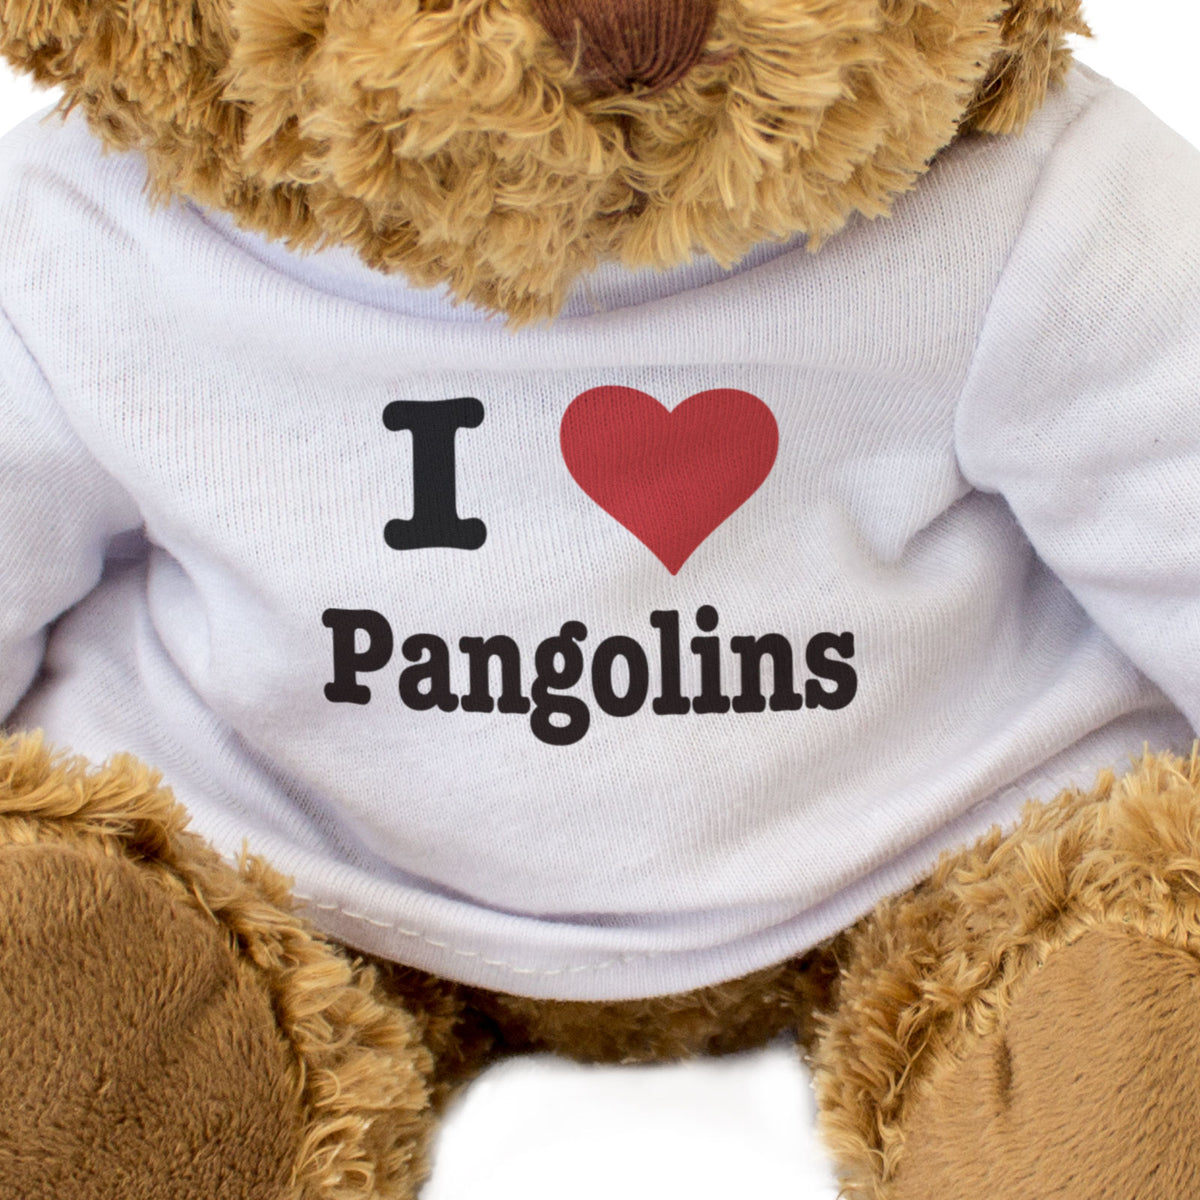 I Love Pangolins - Teddy Bear